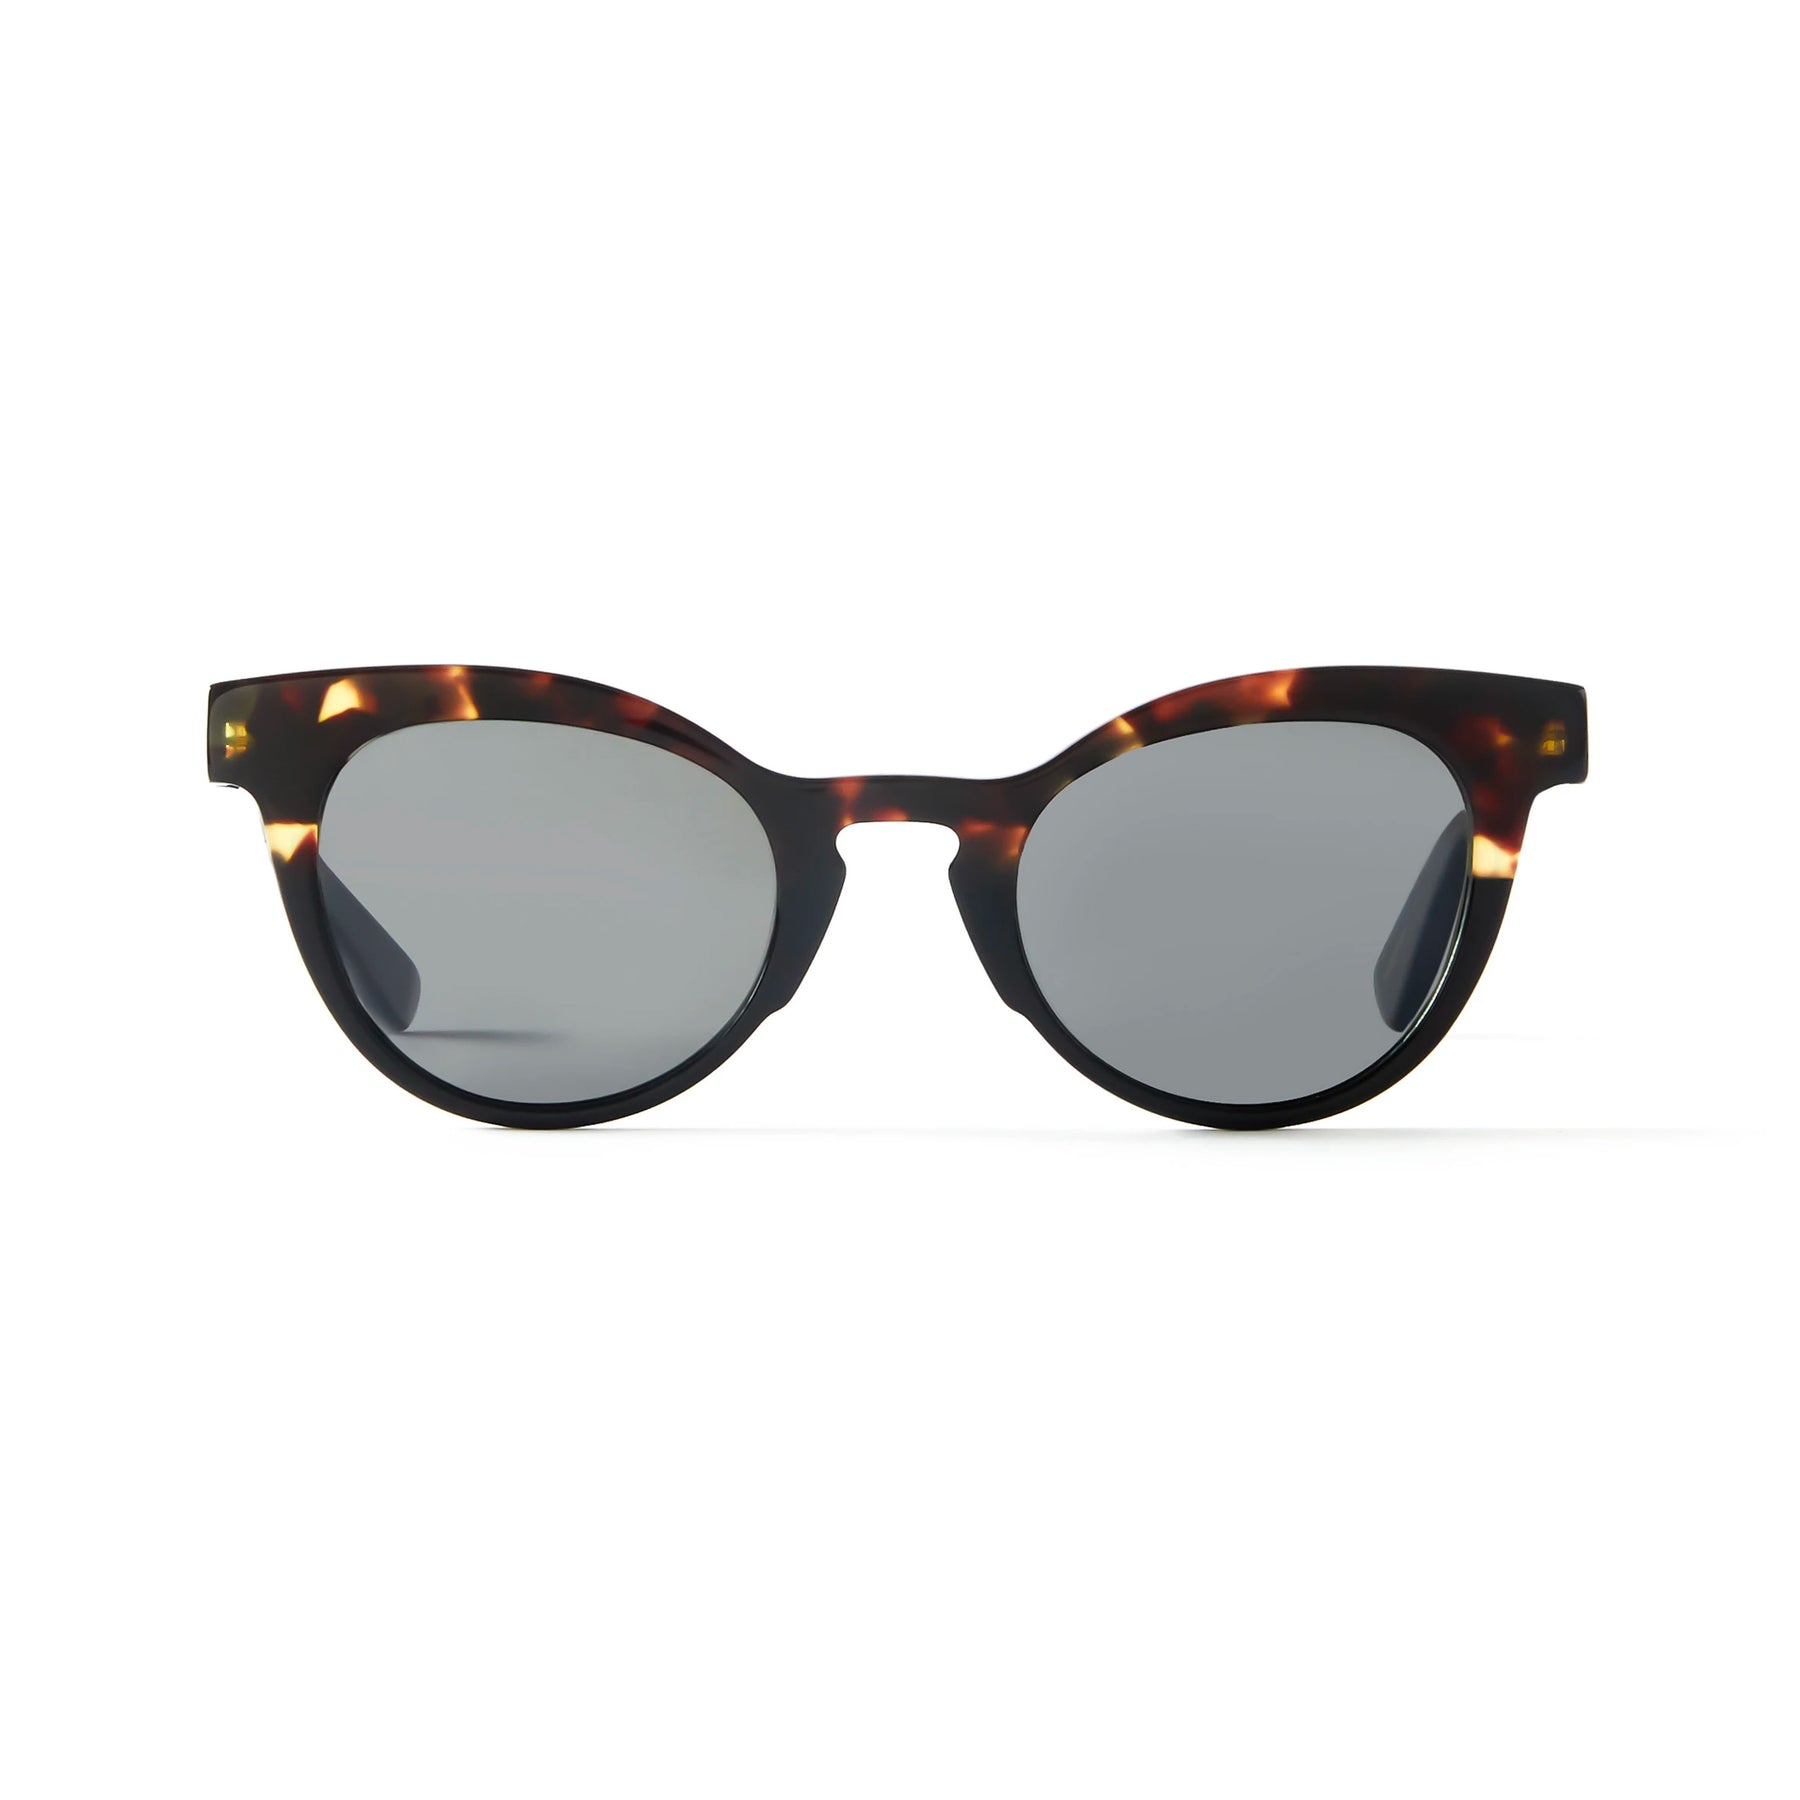 Céline Sun Black & Tortoise Sunglasses – FRENCH KIWIS